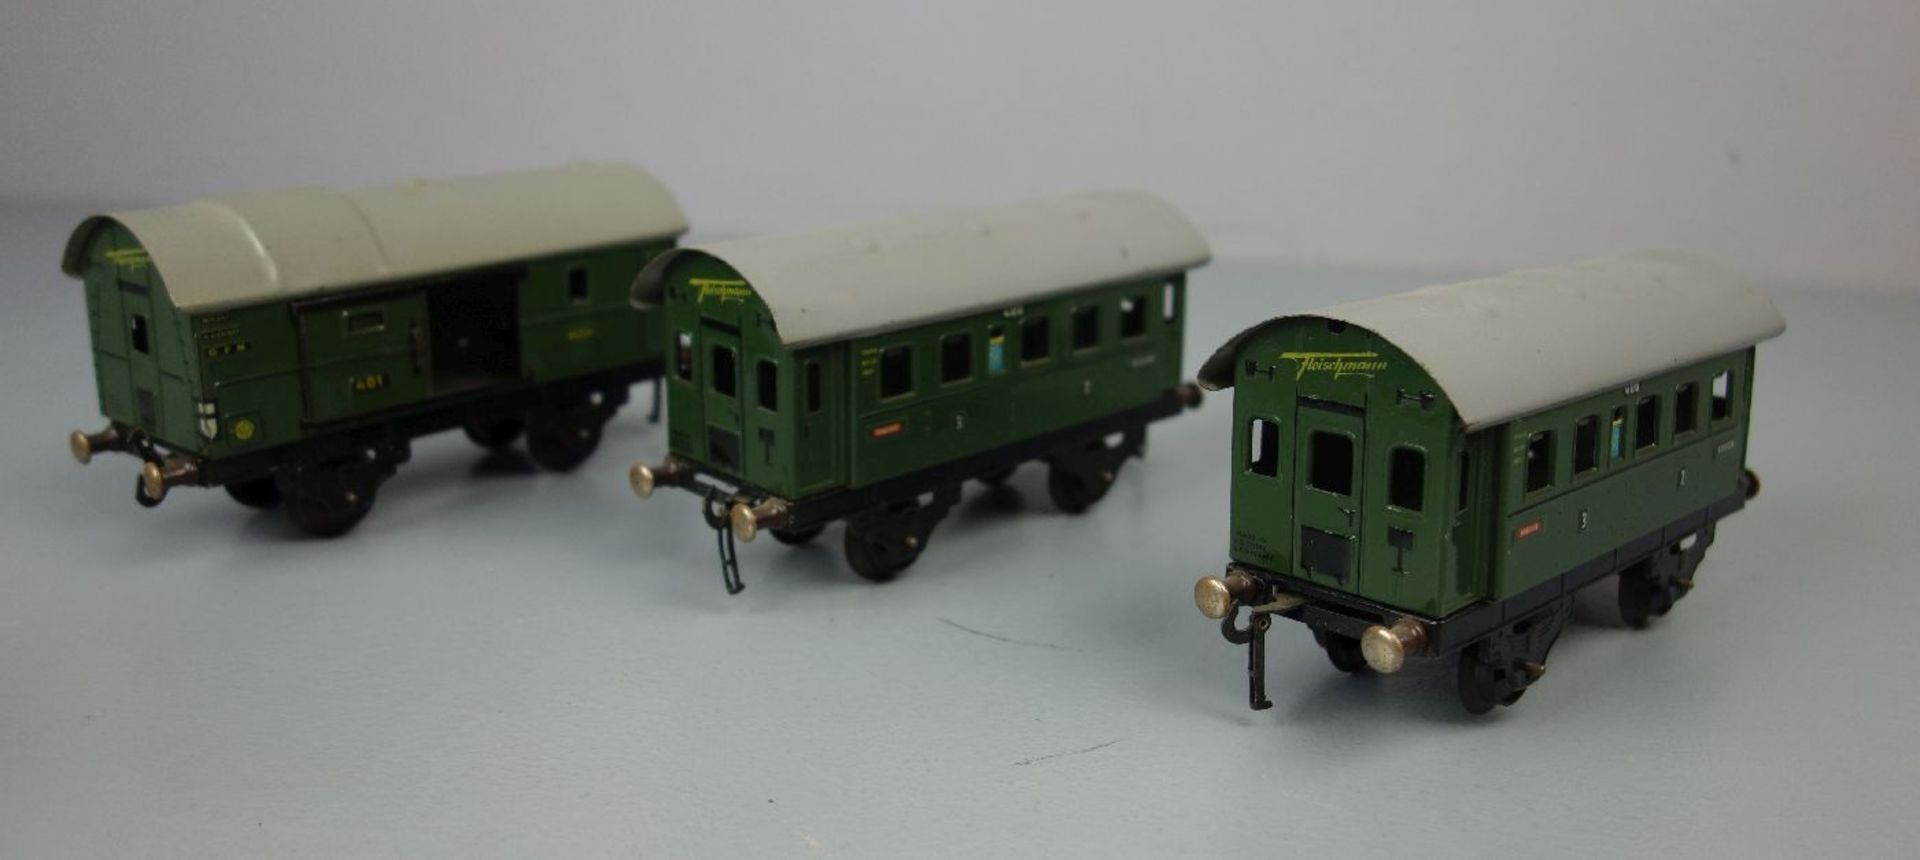 BLECHSPIELZEUG / EISENBAHN-SET: Dampflok-Set im Karton / tin toy railway, um 1950, Manufaktur - Bild 6 aus 12